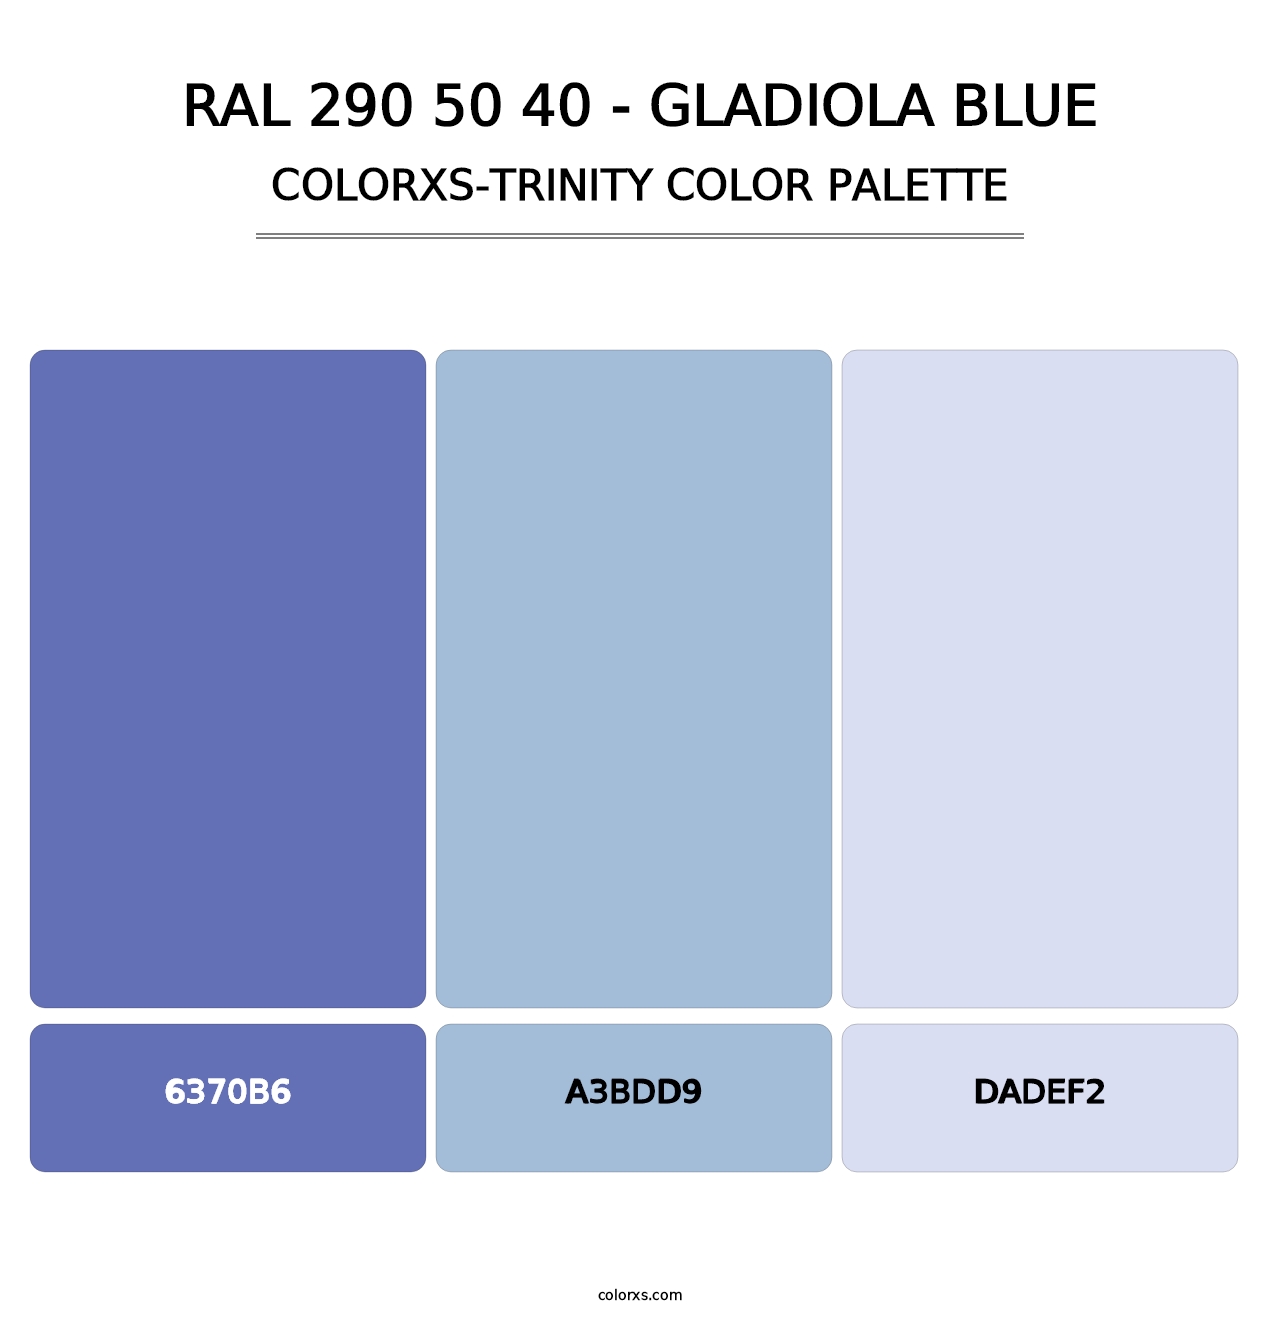 RAL 290 50 40 - Gladiola Blue - Colorxs Trinity Palette